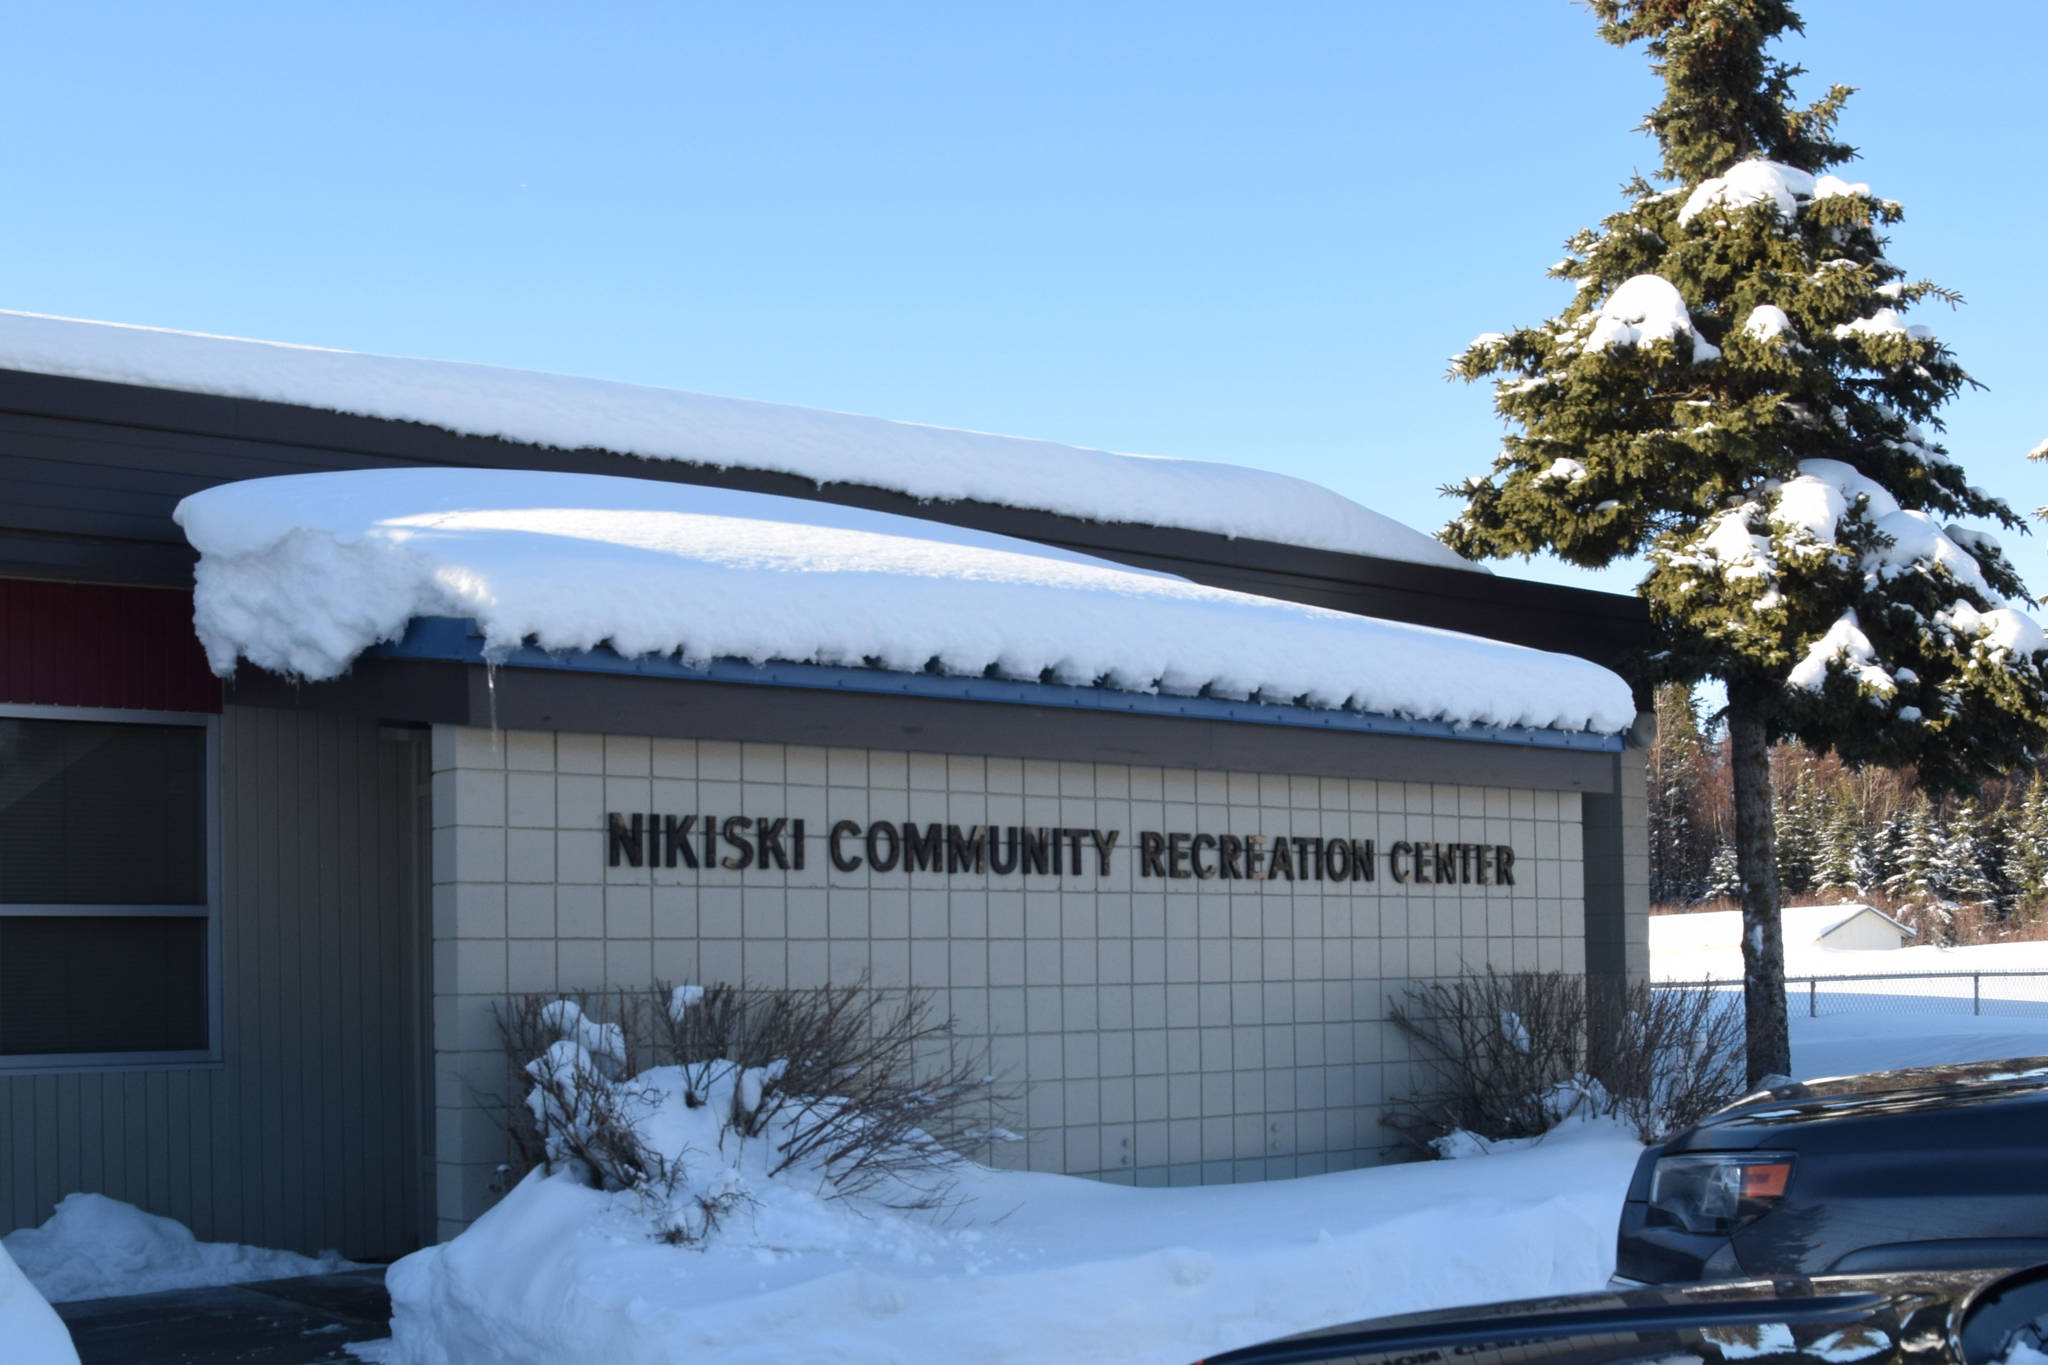 The Nikiski Community Recreation Center as seen on Feb. 21, 2019. (Photo by Brian Mazurek/Peninsula Clarion)